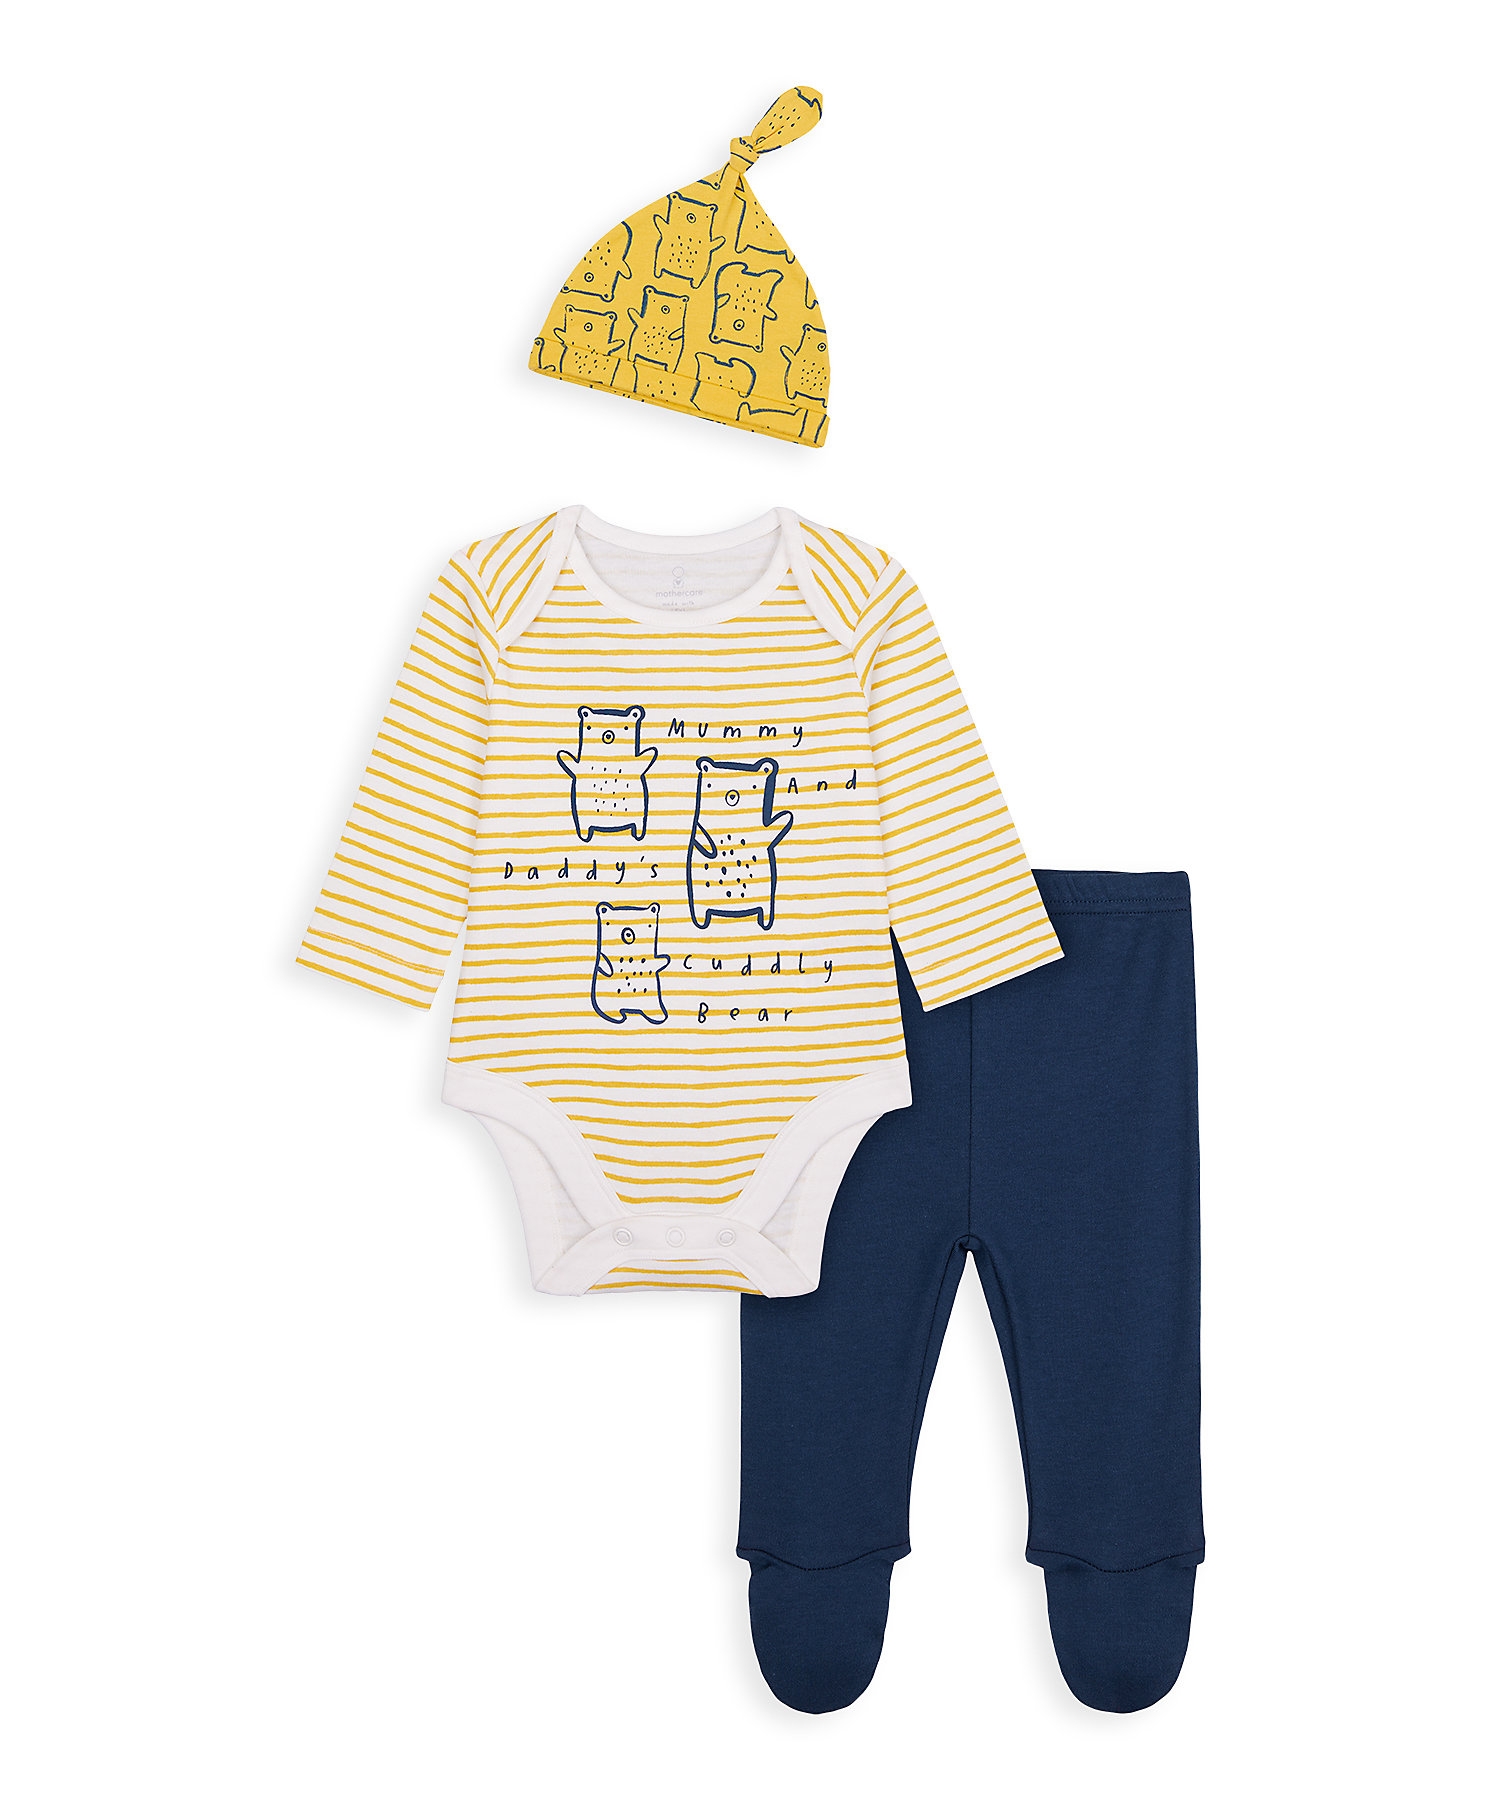 Boys Full Sleeves 3 Piece Set Bear Print - Yellow